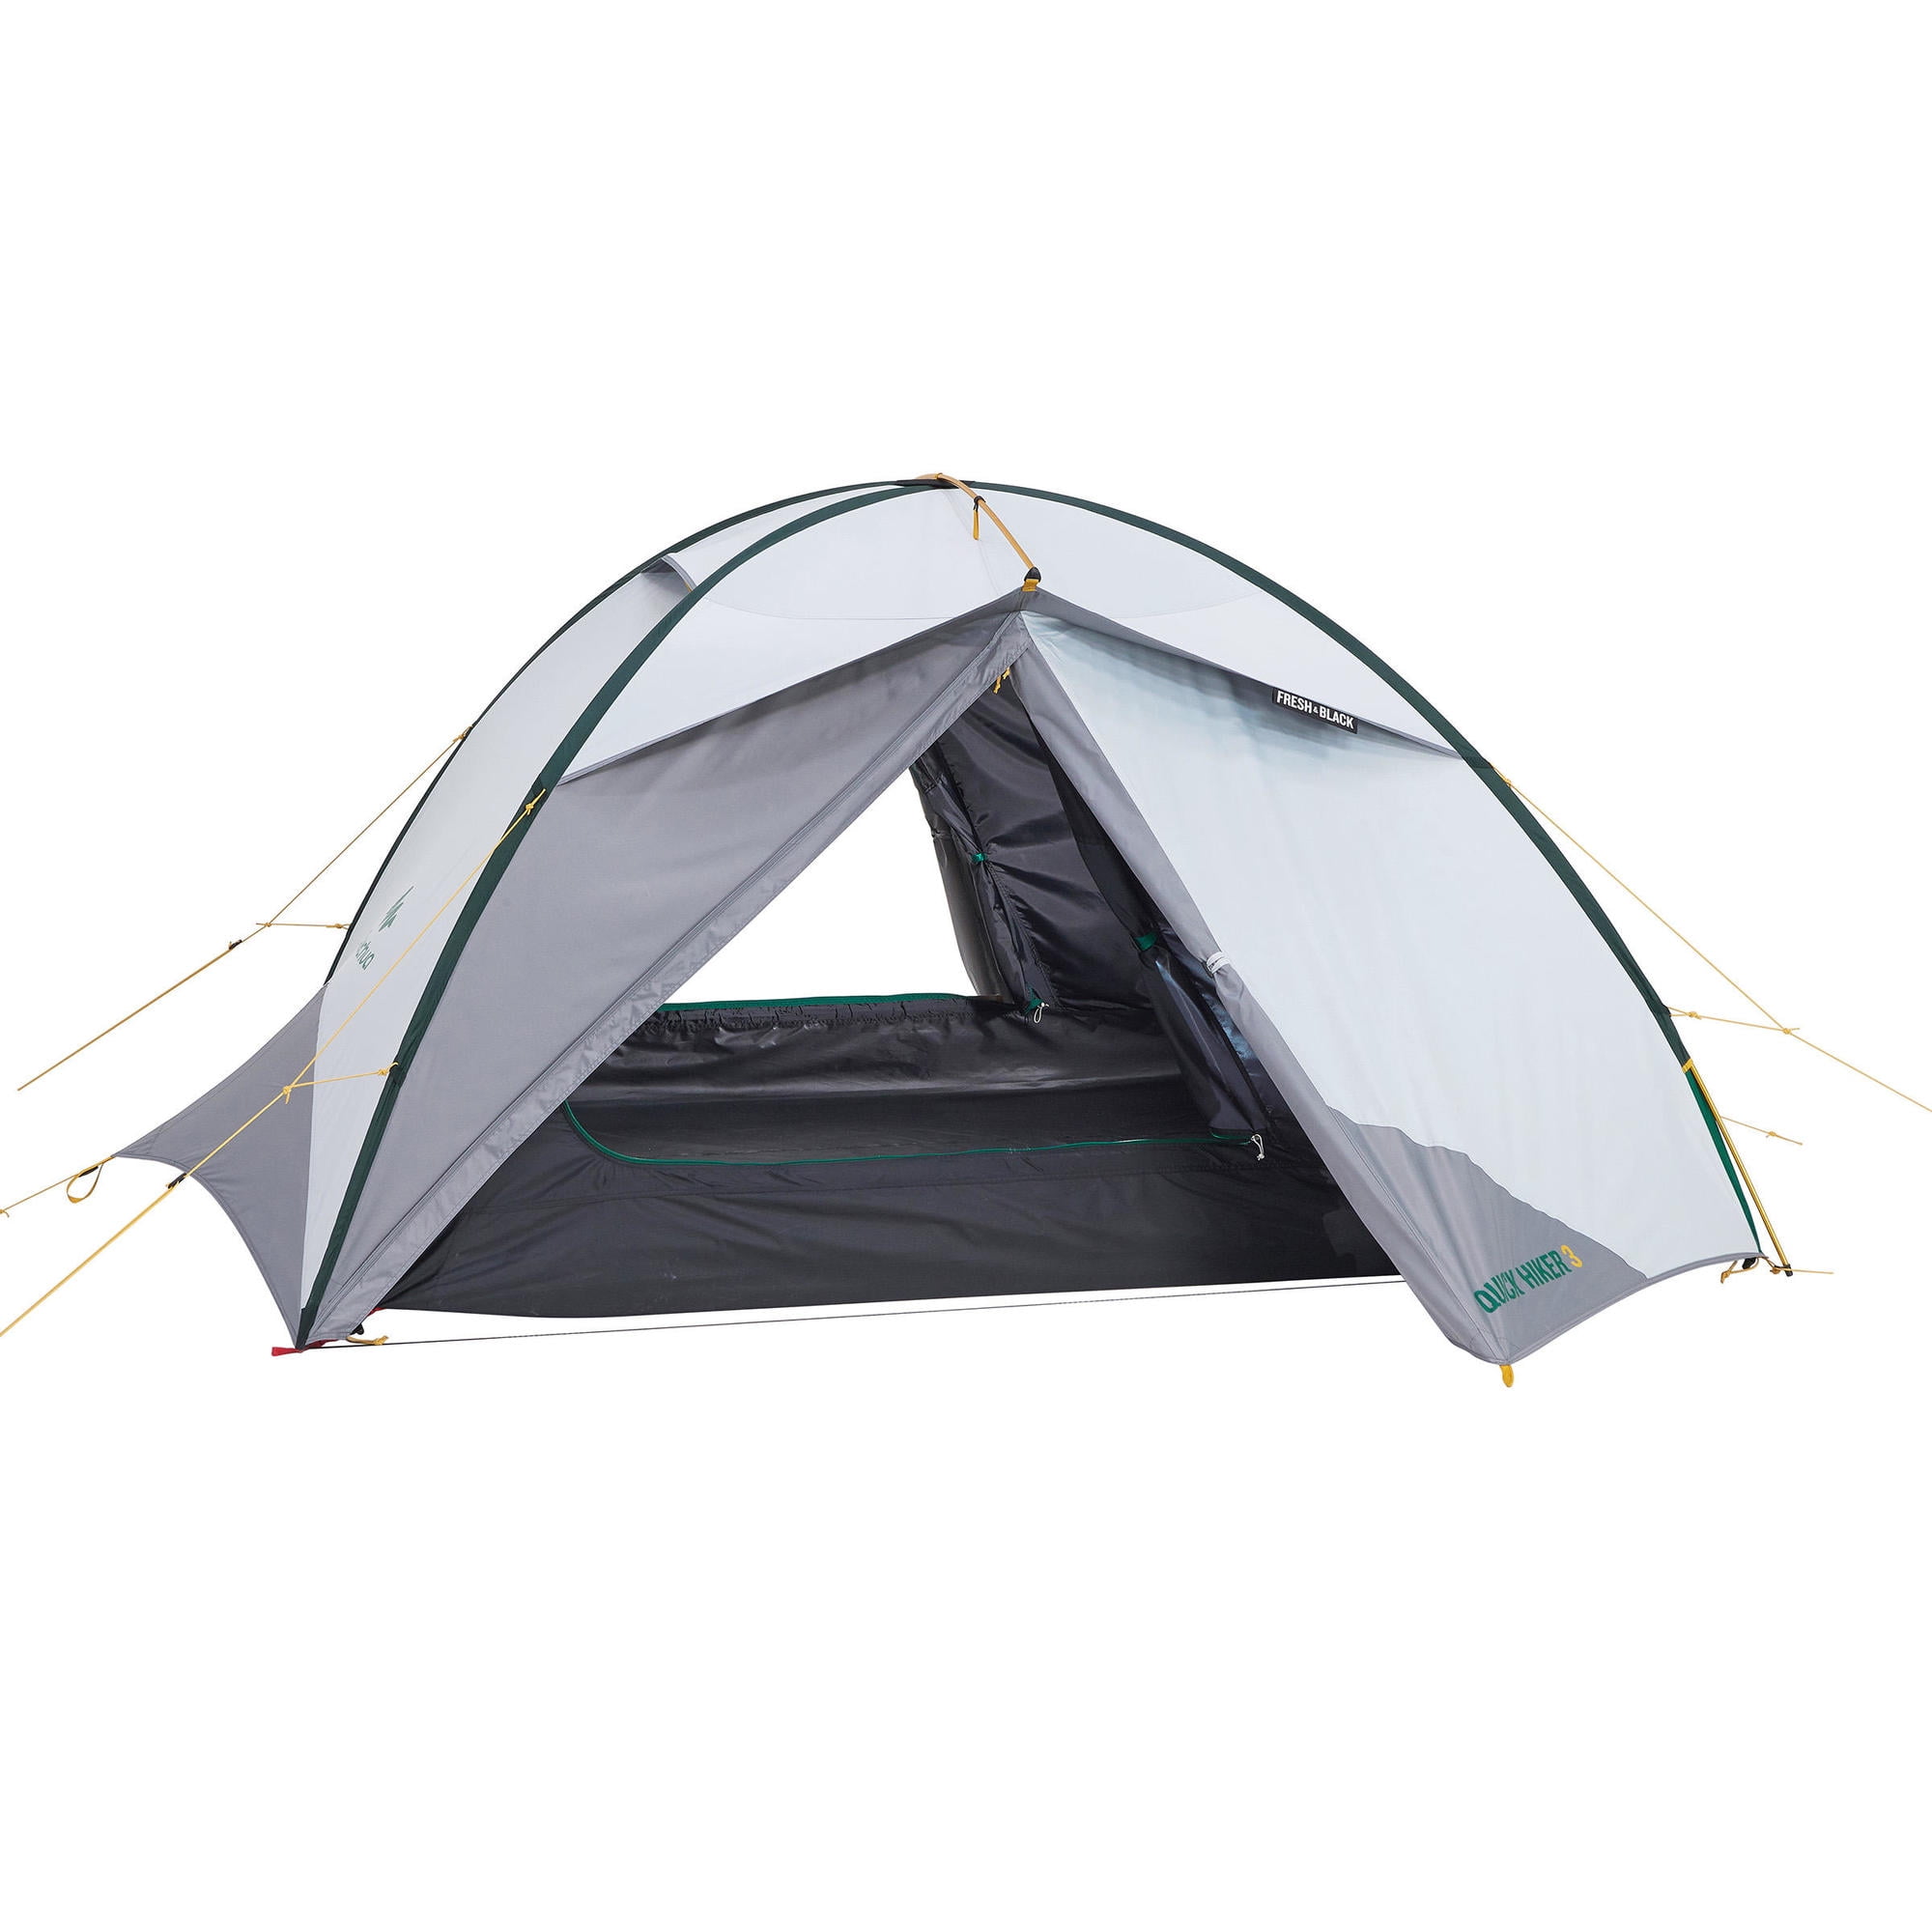 decathlon 1 man tent